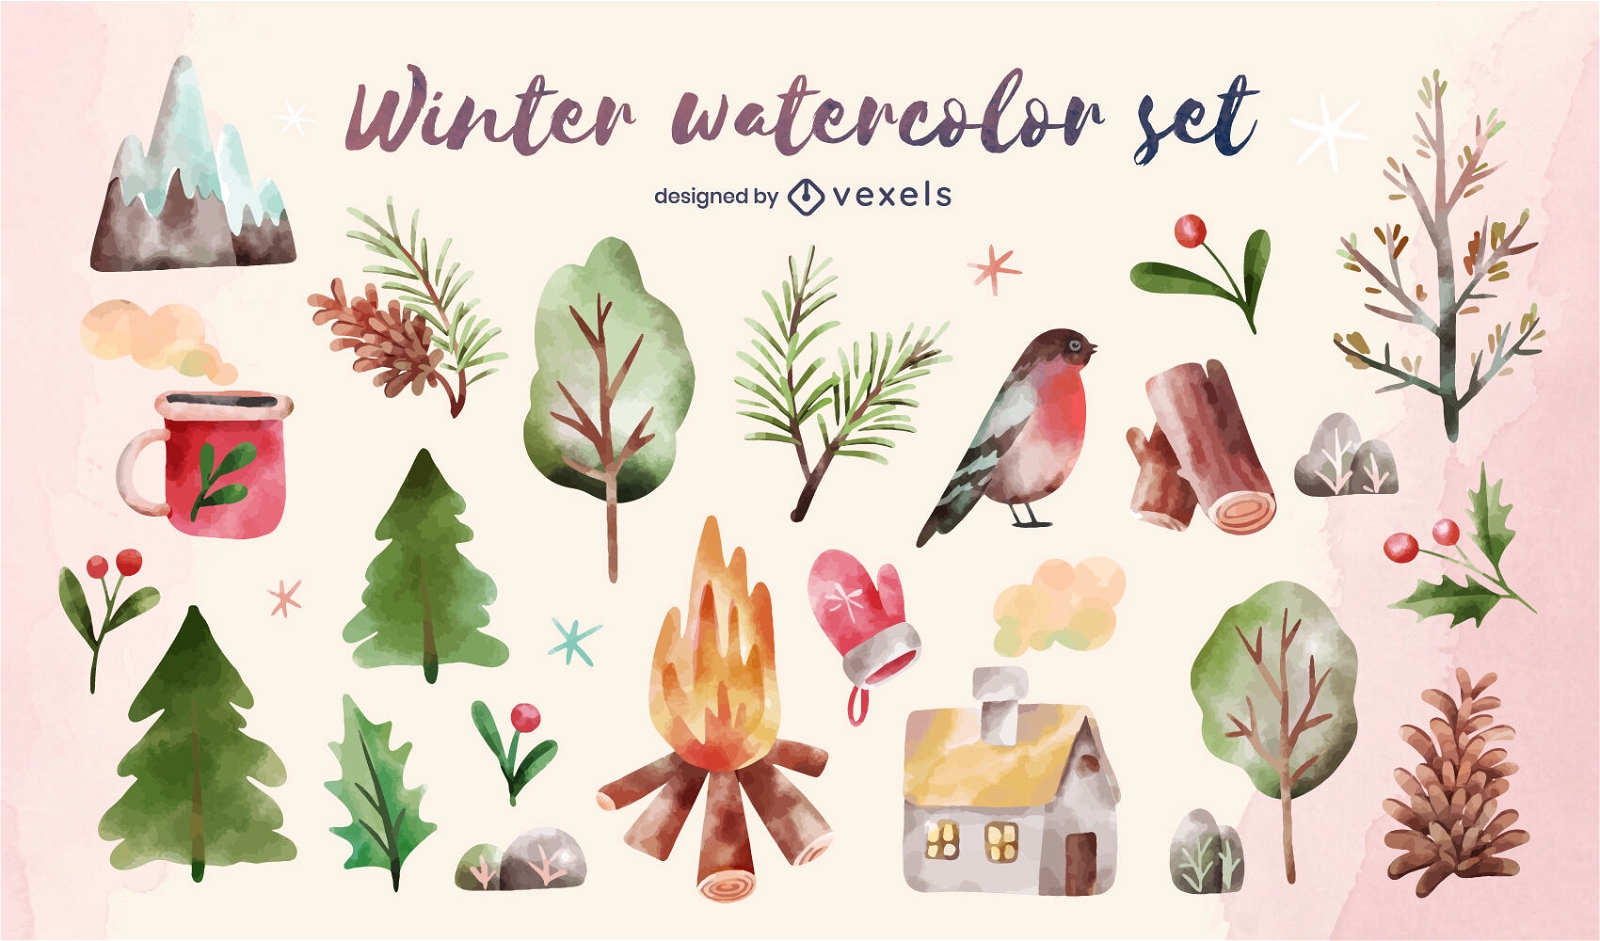 Winter nature elements watercolor set